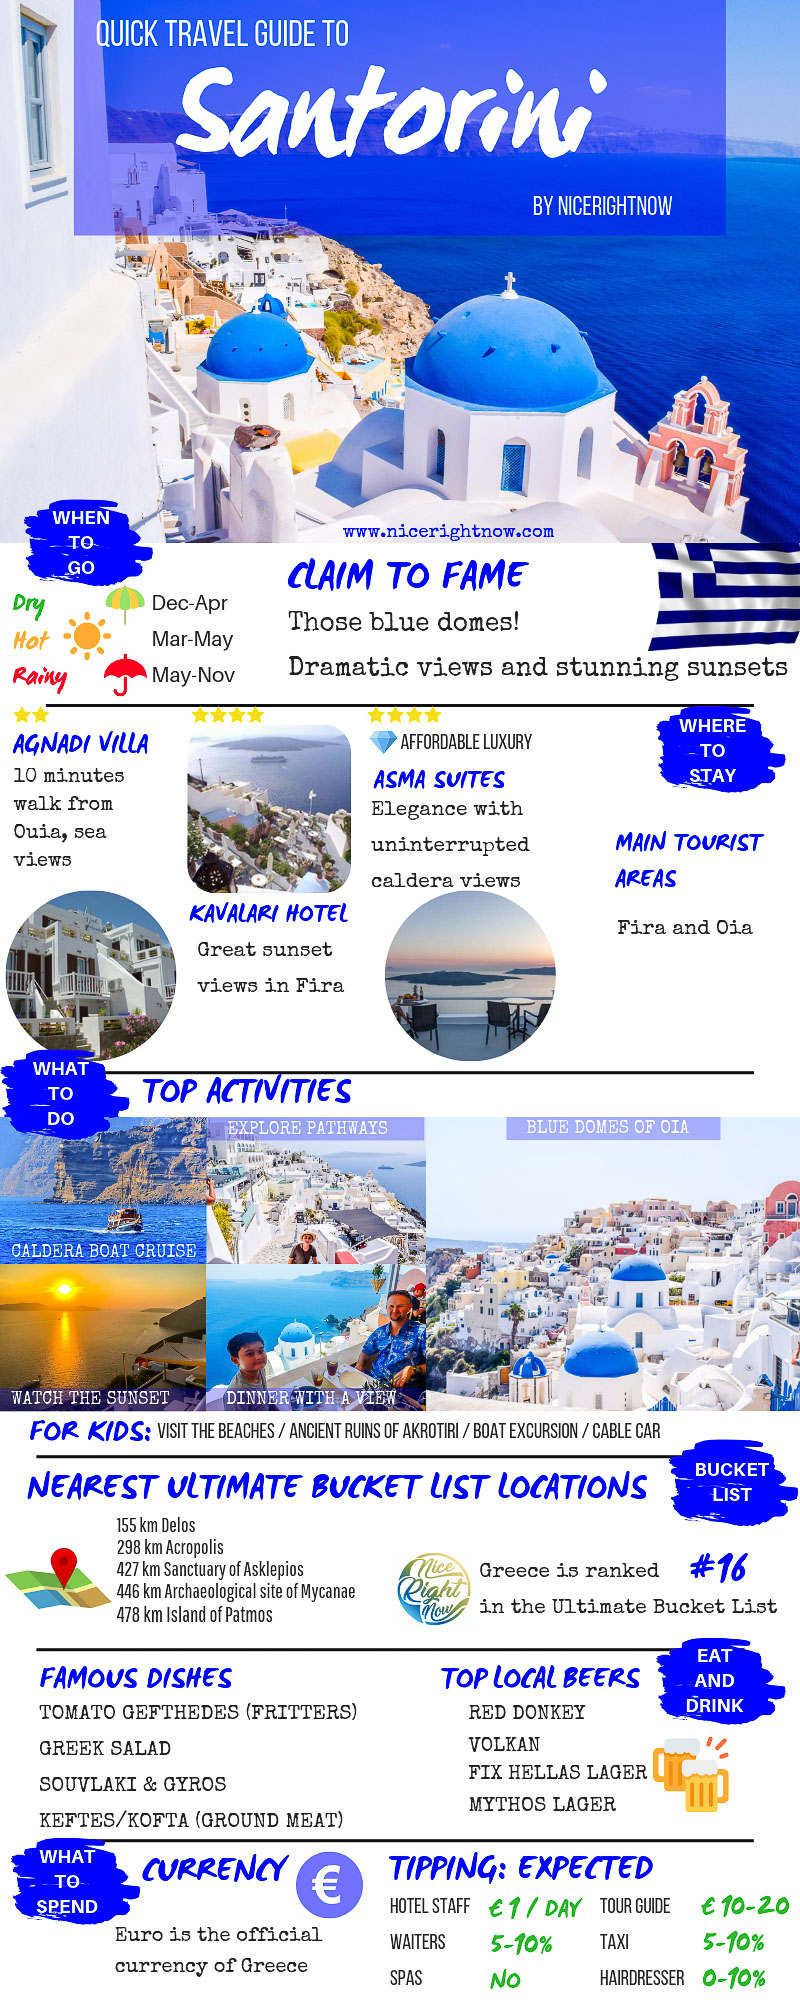 Quick Travel Guide to Santorini